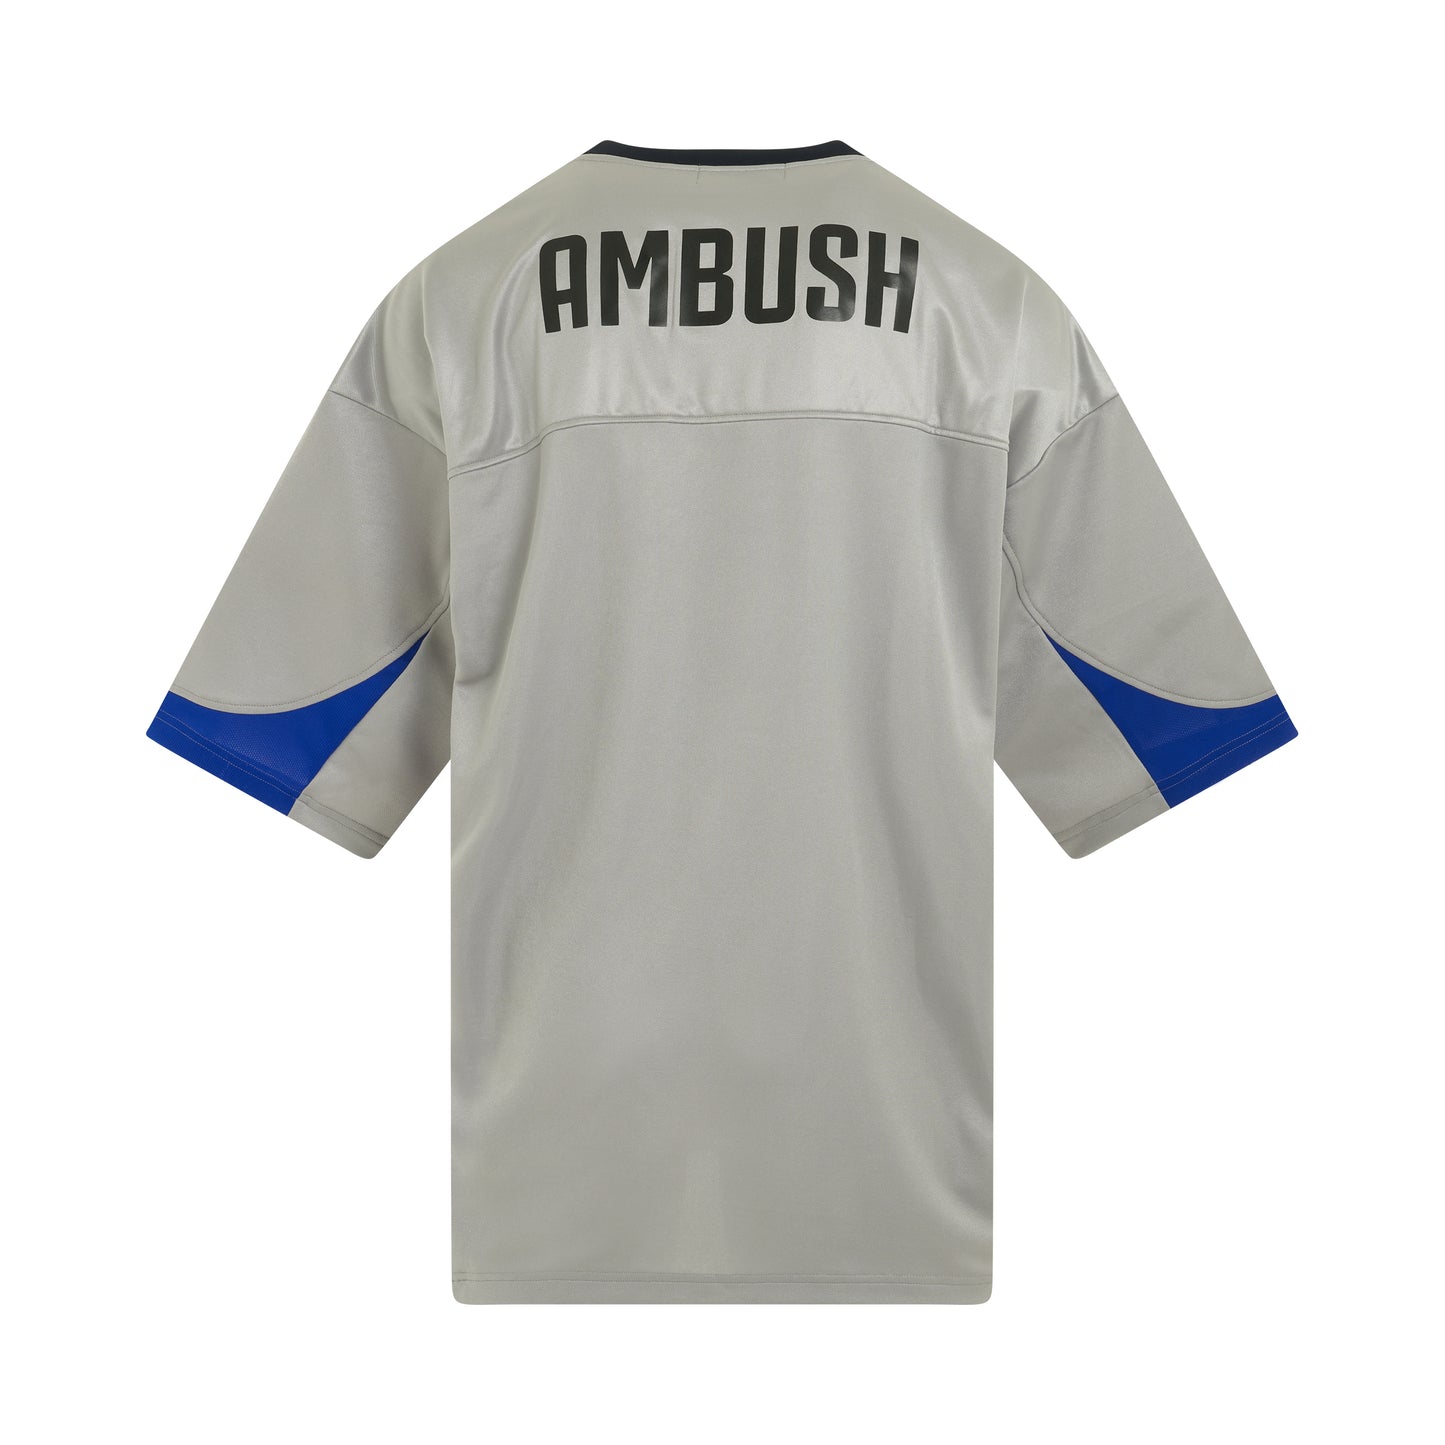 Football Shirt in Ash/Black